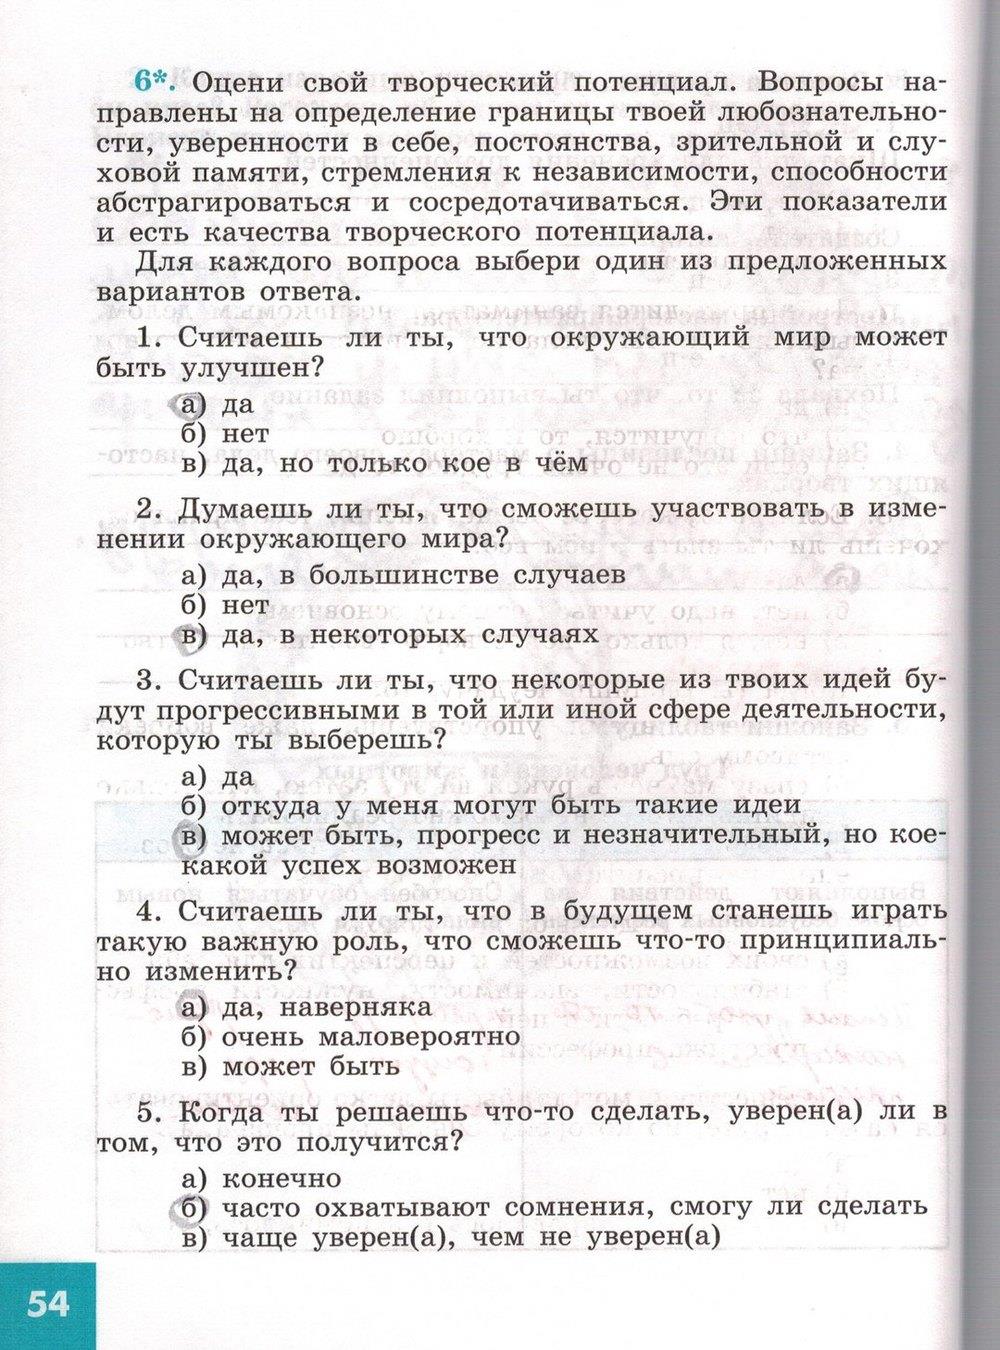 гдз 5 класс рабочая тетрадь страница 54 обществознание Иванова, Хотеенкова